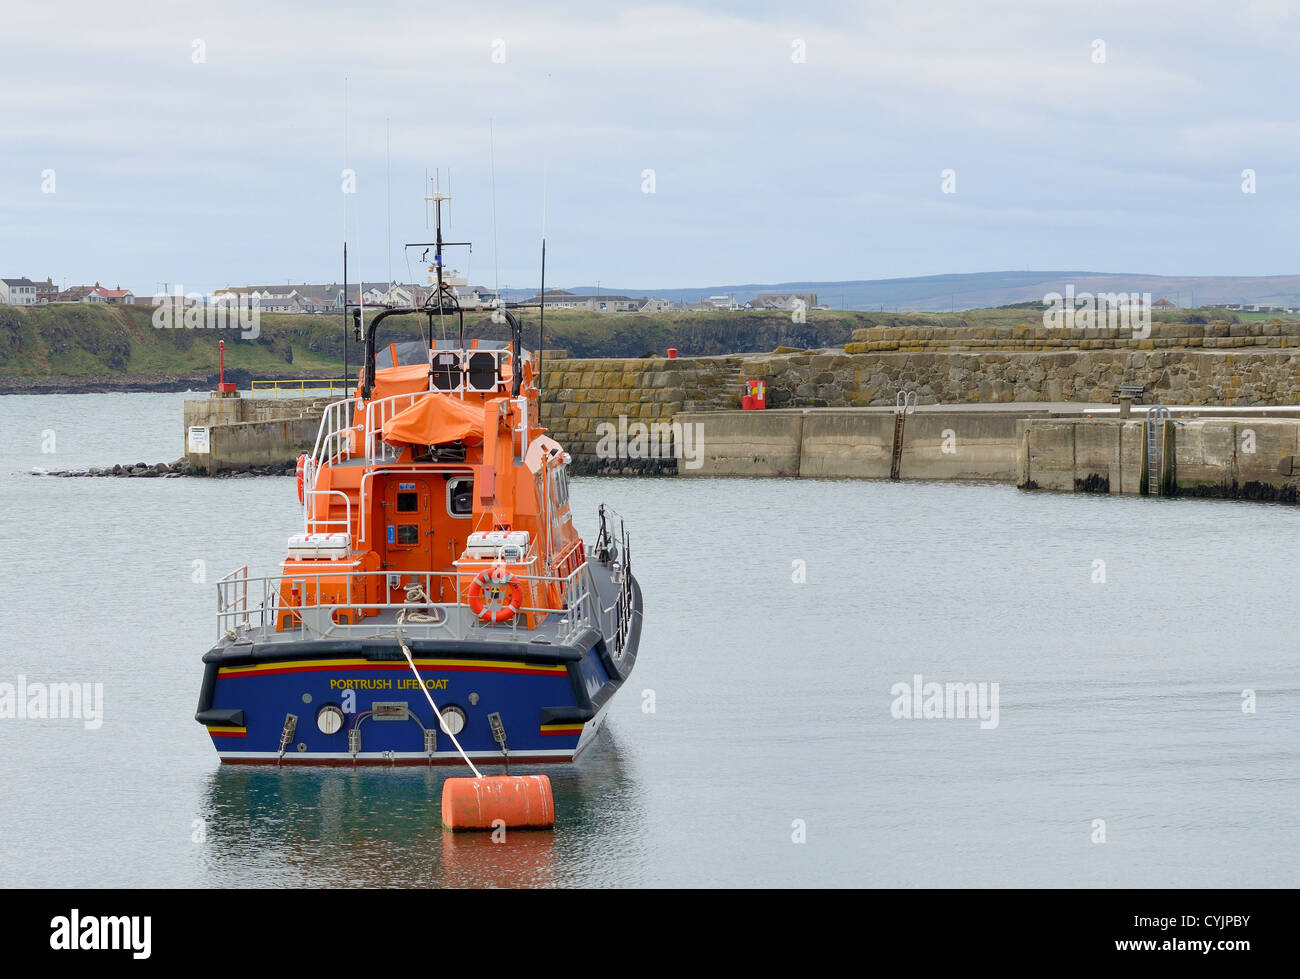 Rettungsboot Anker im Hafen in Portrush - Nordirland. Stockfoto